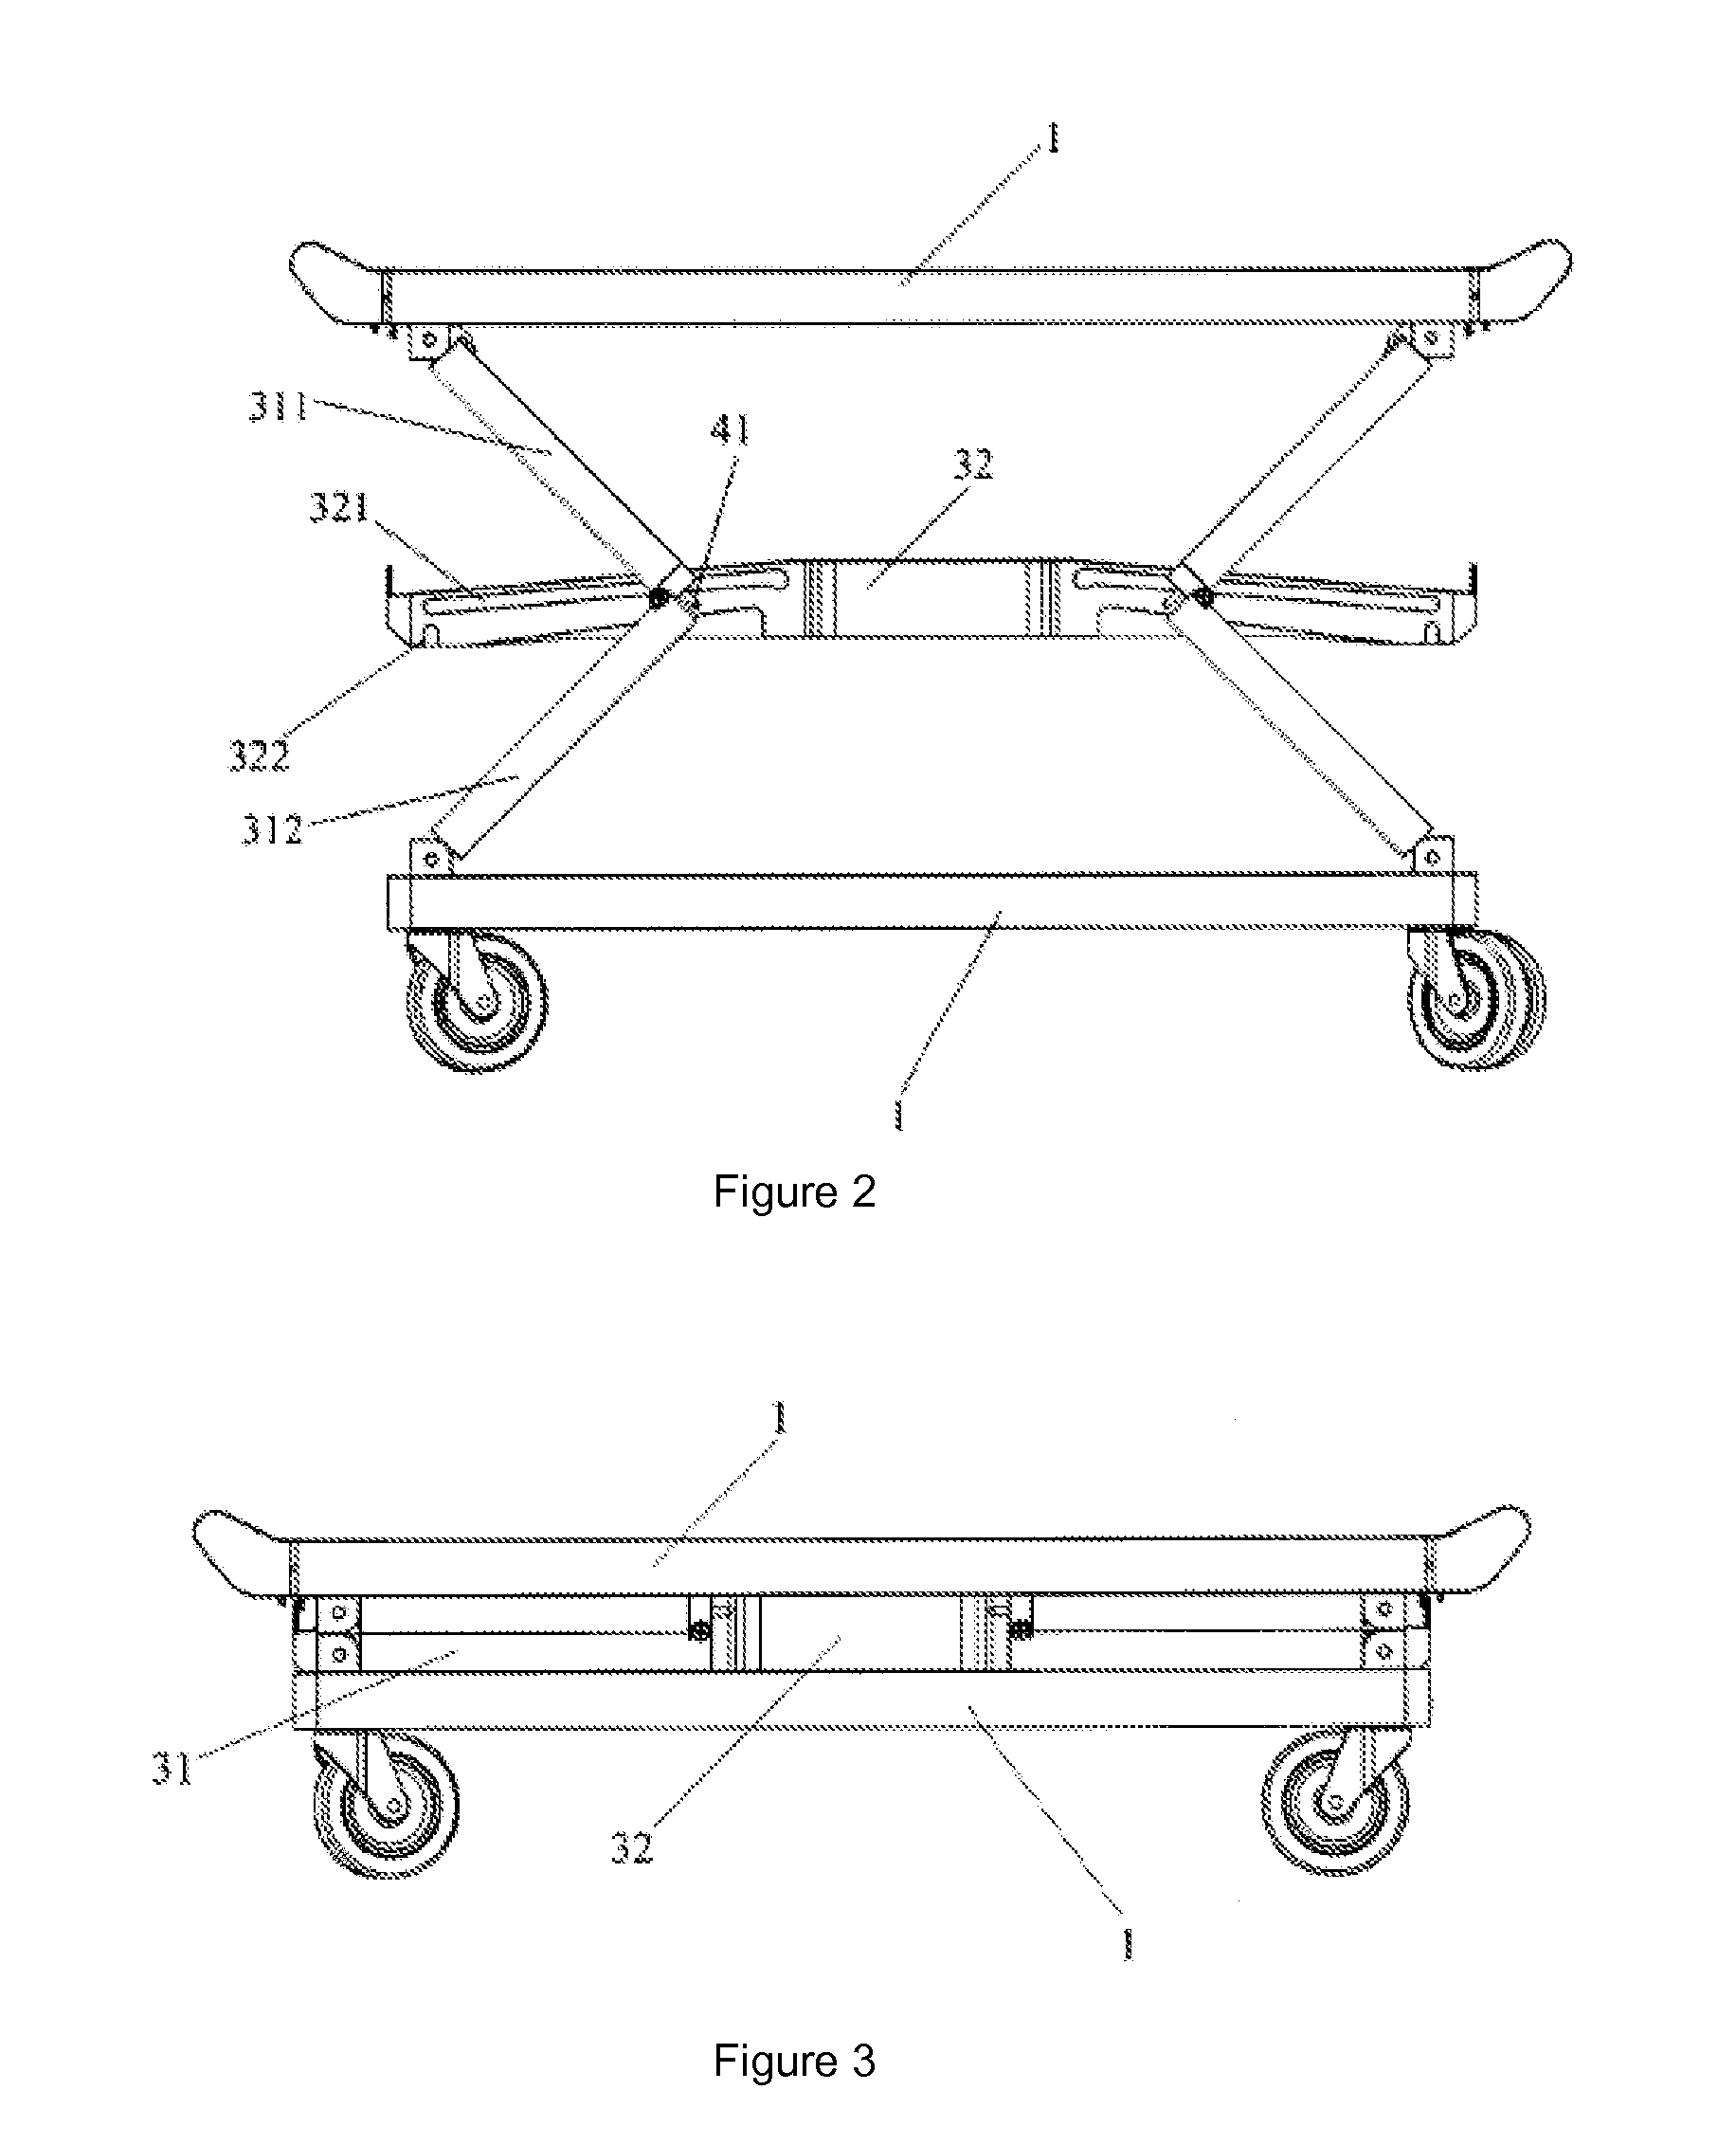 Foldable table mechanism